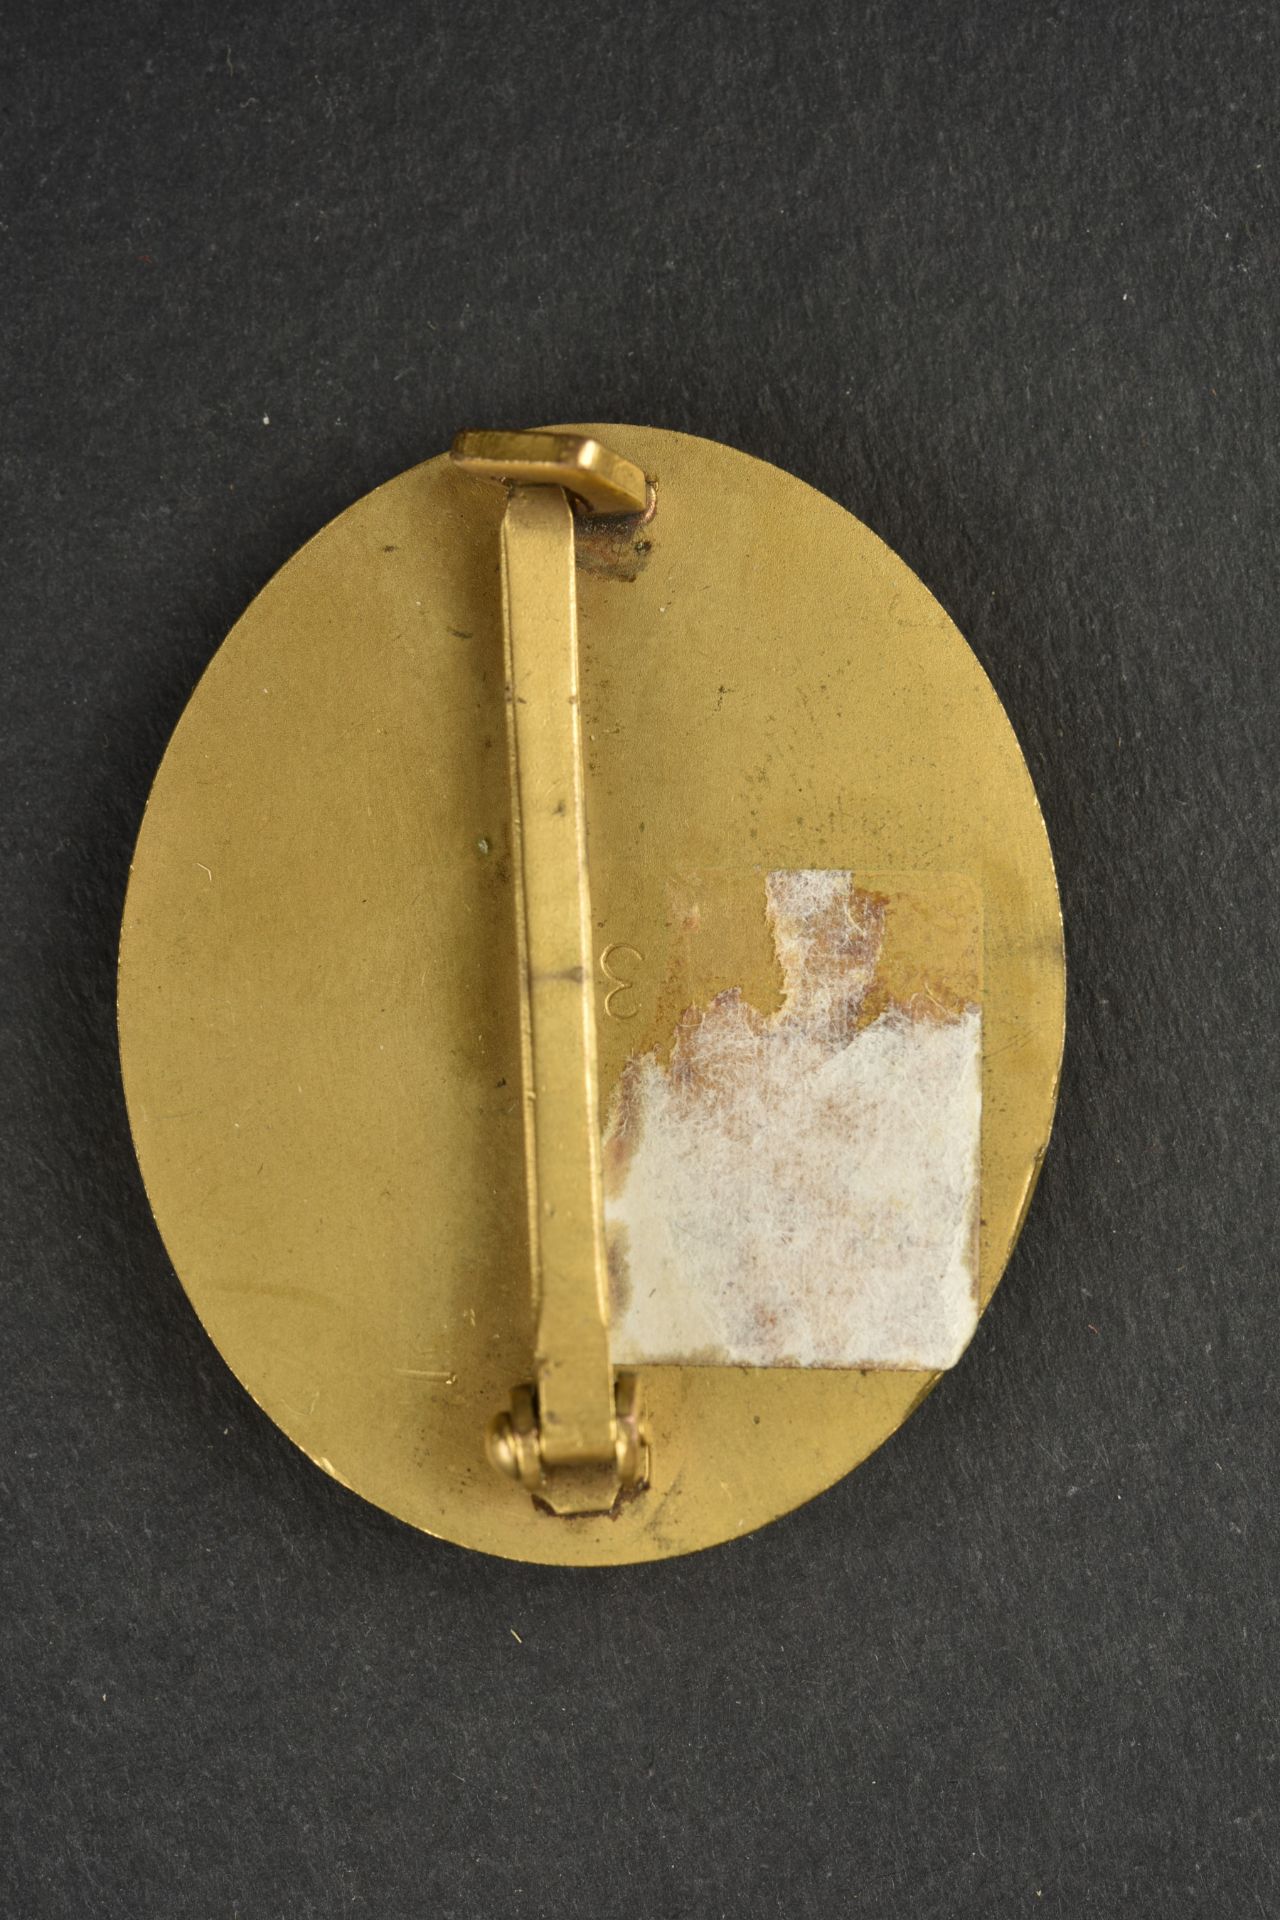 Insigne des blesses or. Gold wounded badge. - Bild 2 aus 2